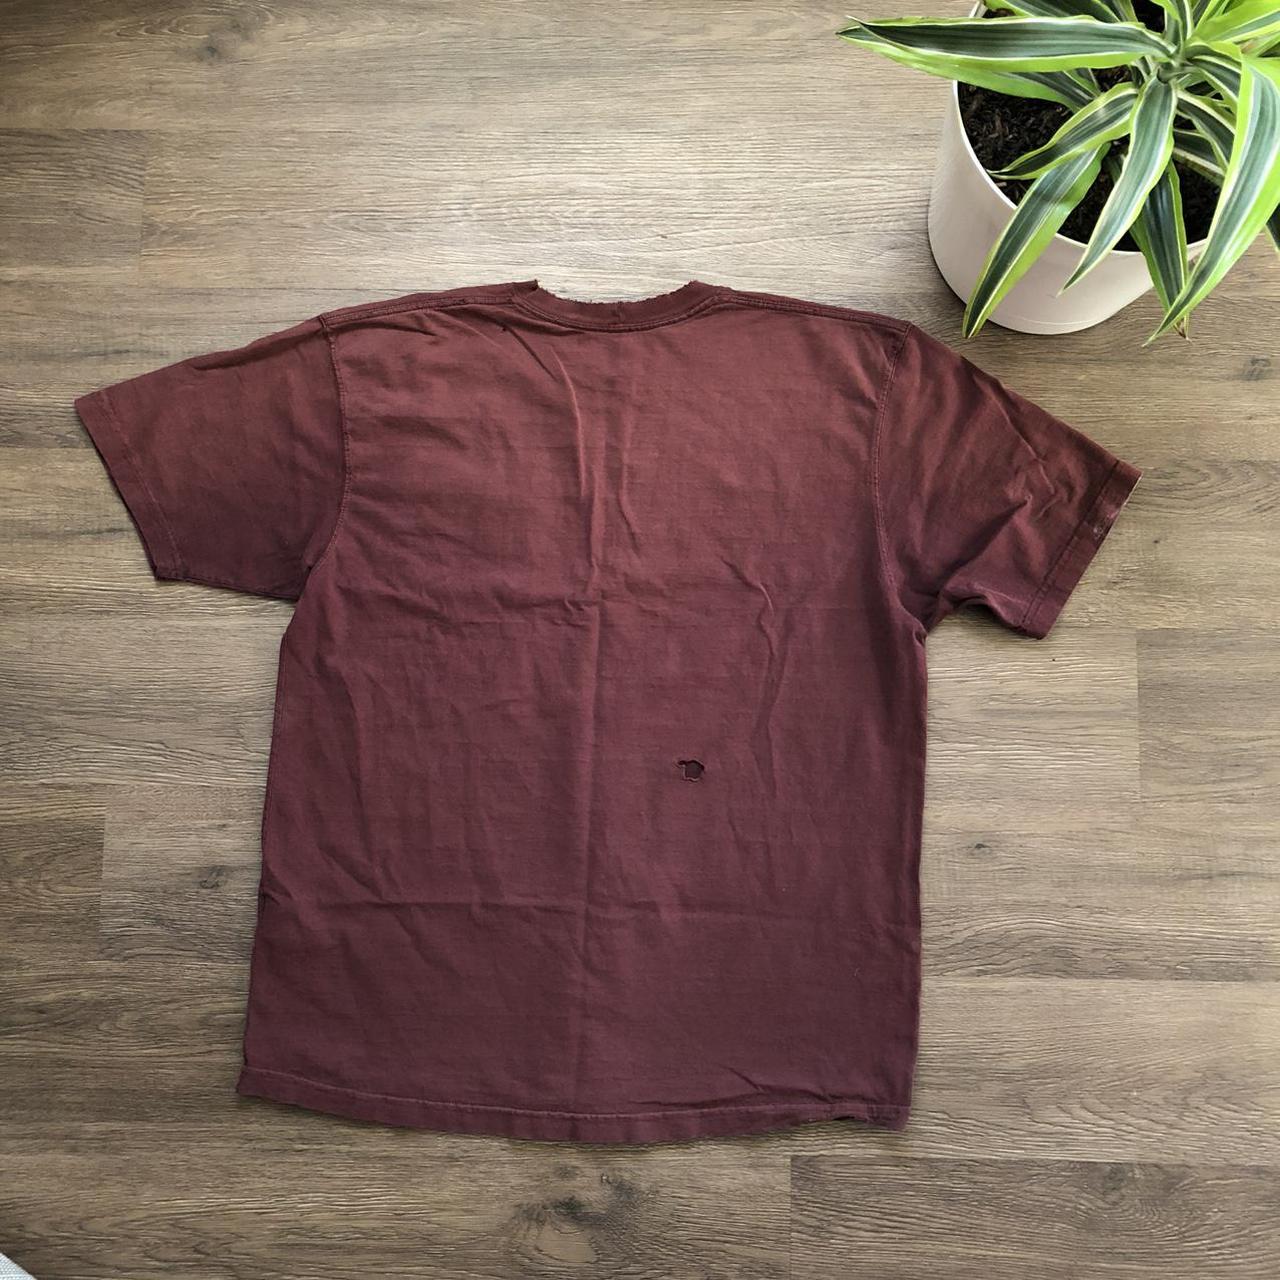 Product Image 2 - 🔥🚧CARHARTT SHIRT🚧🔥
-Nicely worn/distressed Carhartt shirt
-Burgundy/maroon